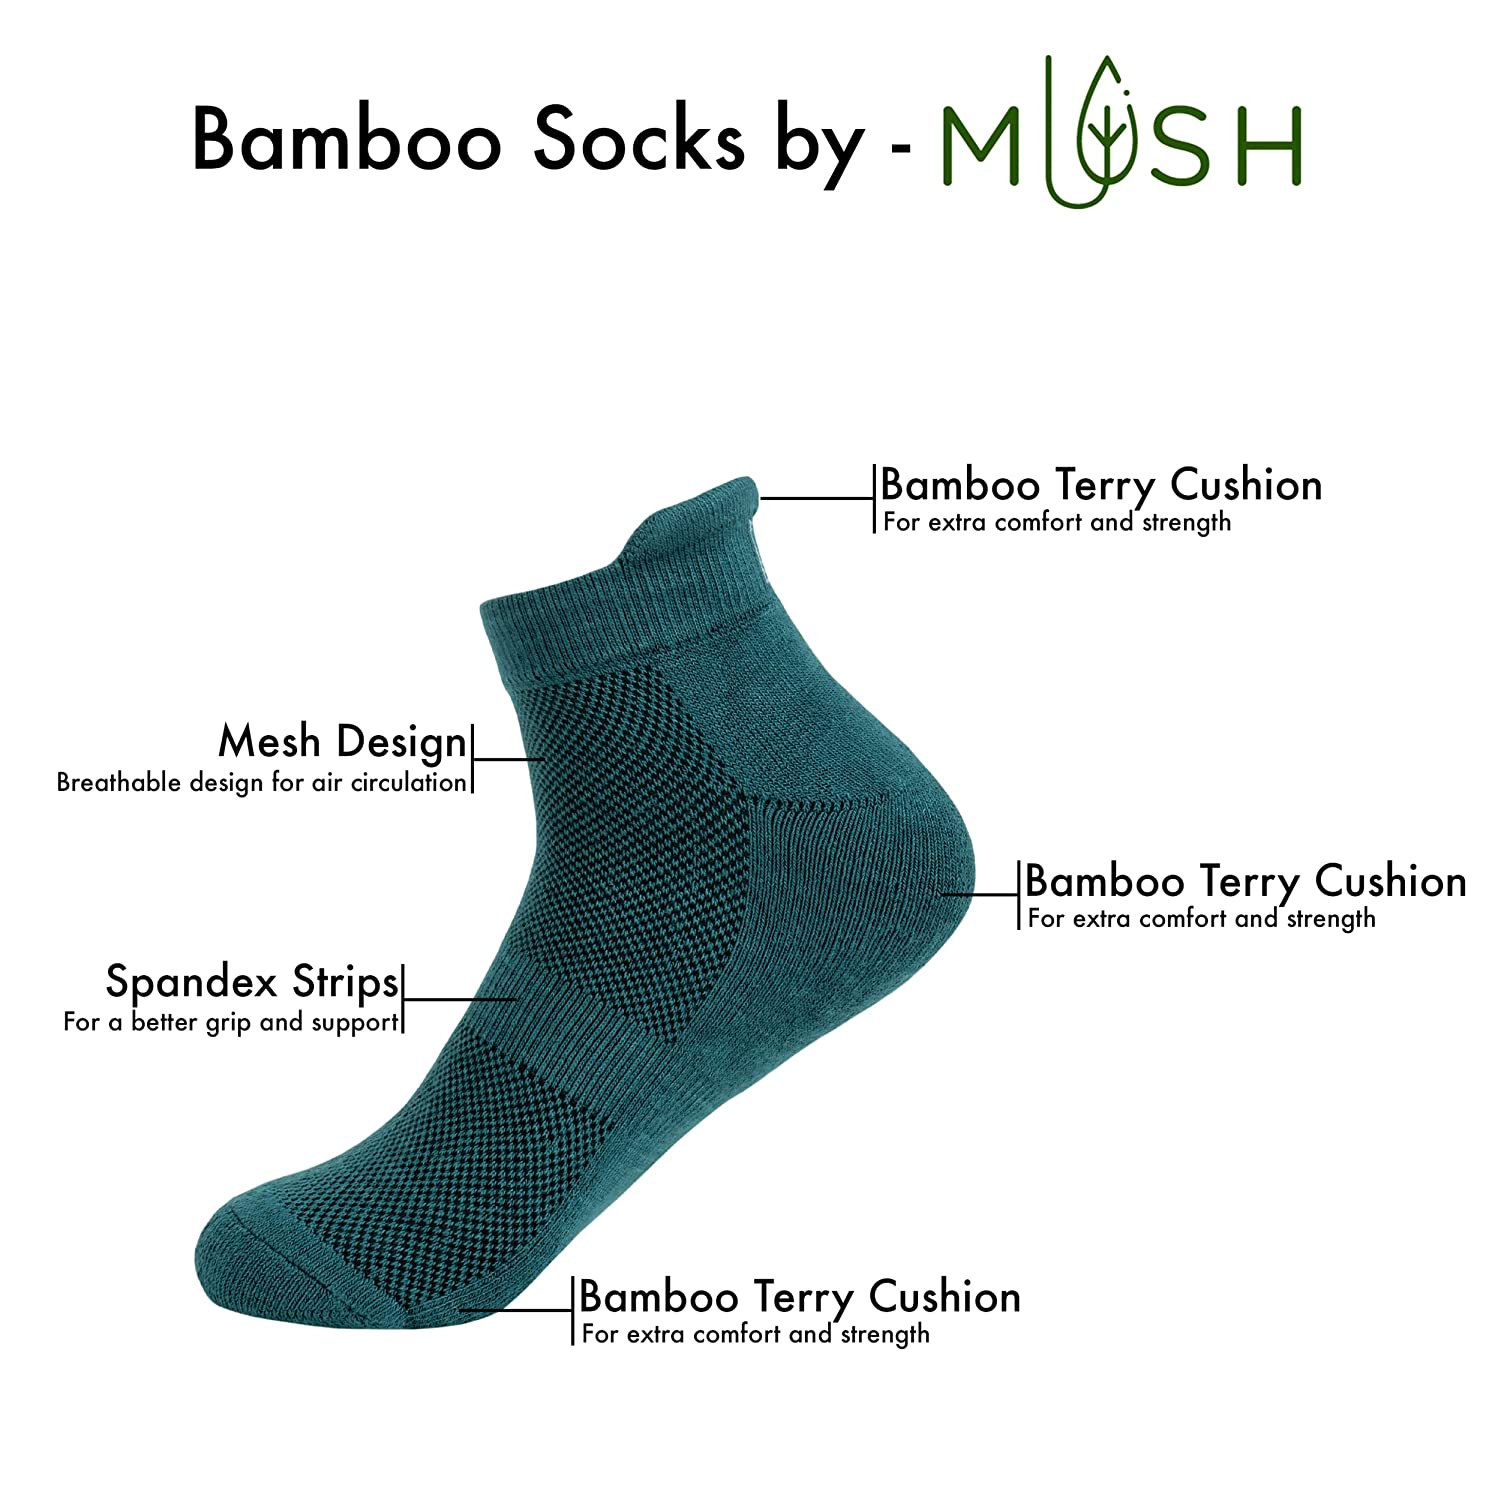 Mush Odorless, Breathable, soft featherlight Bamboo Sports socks (Charcoal Green, 3)